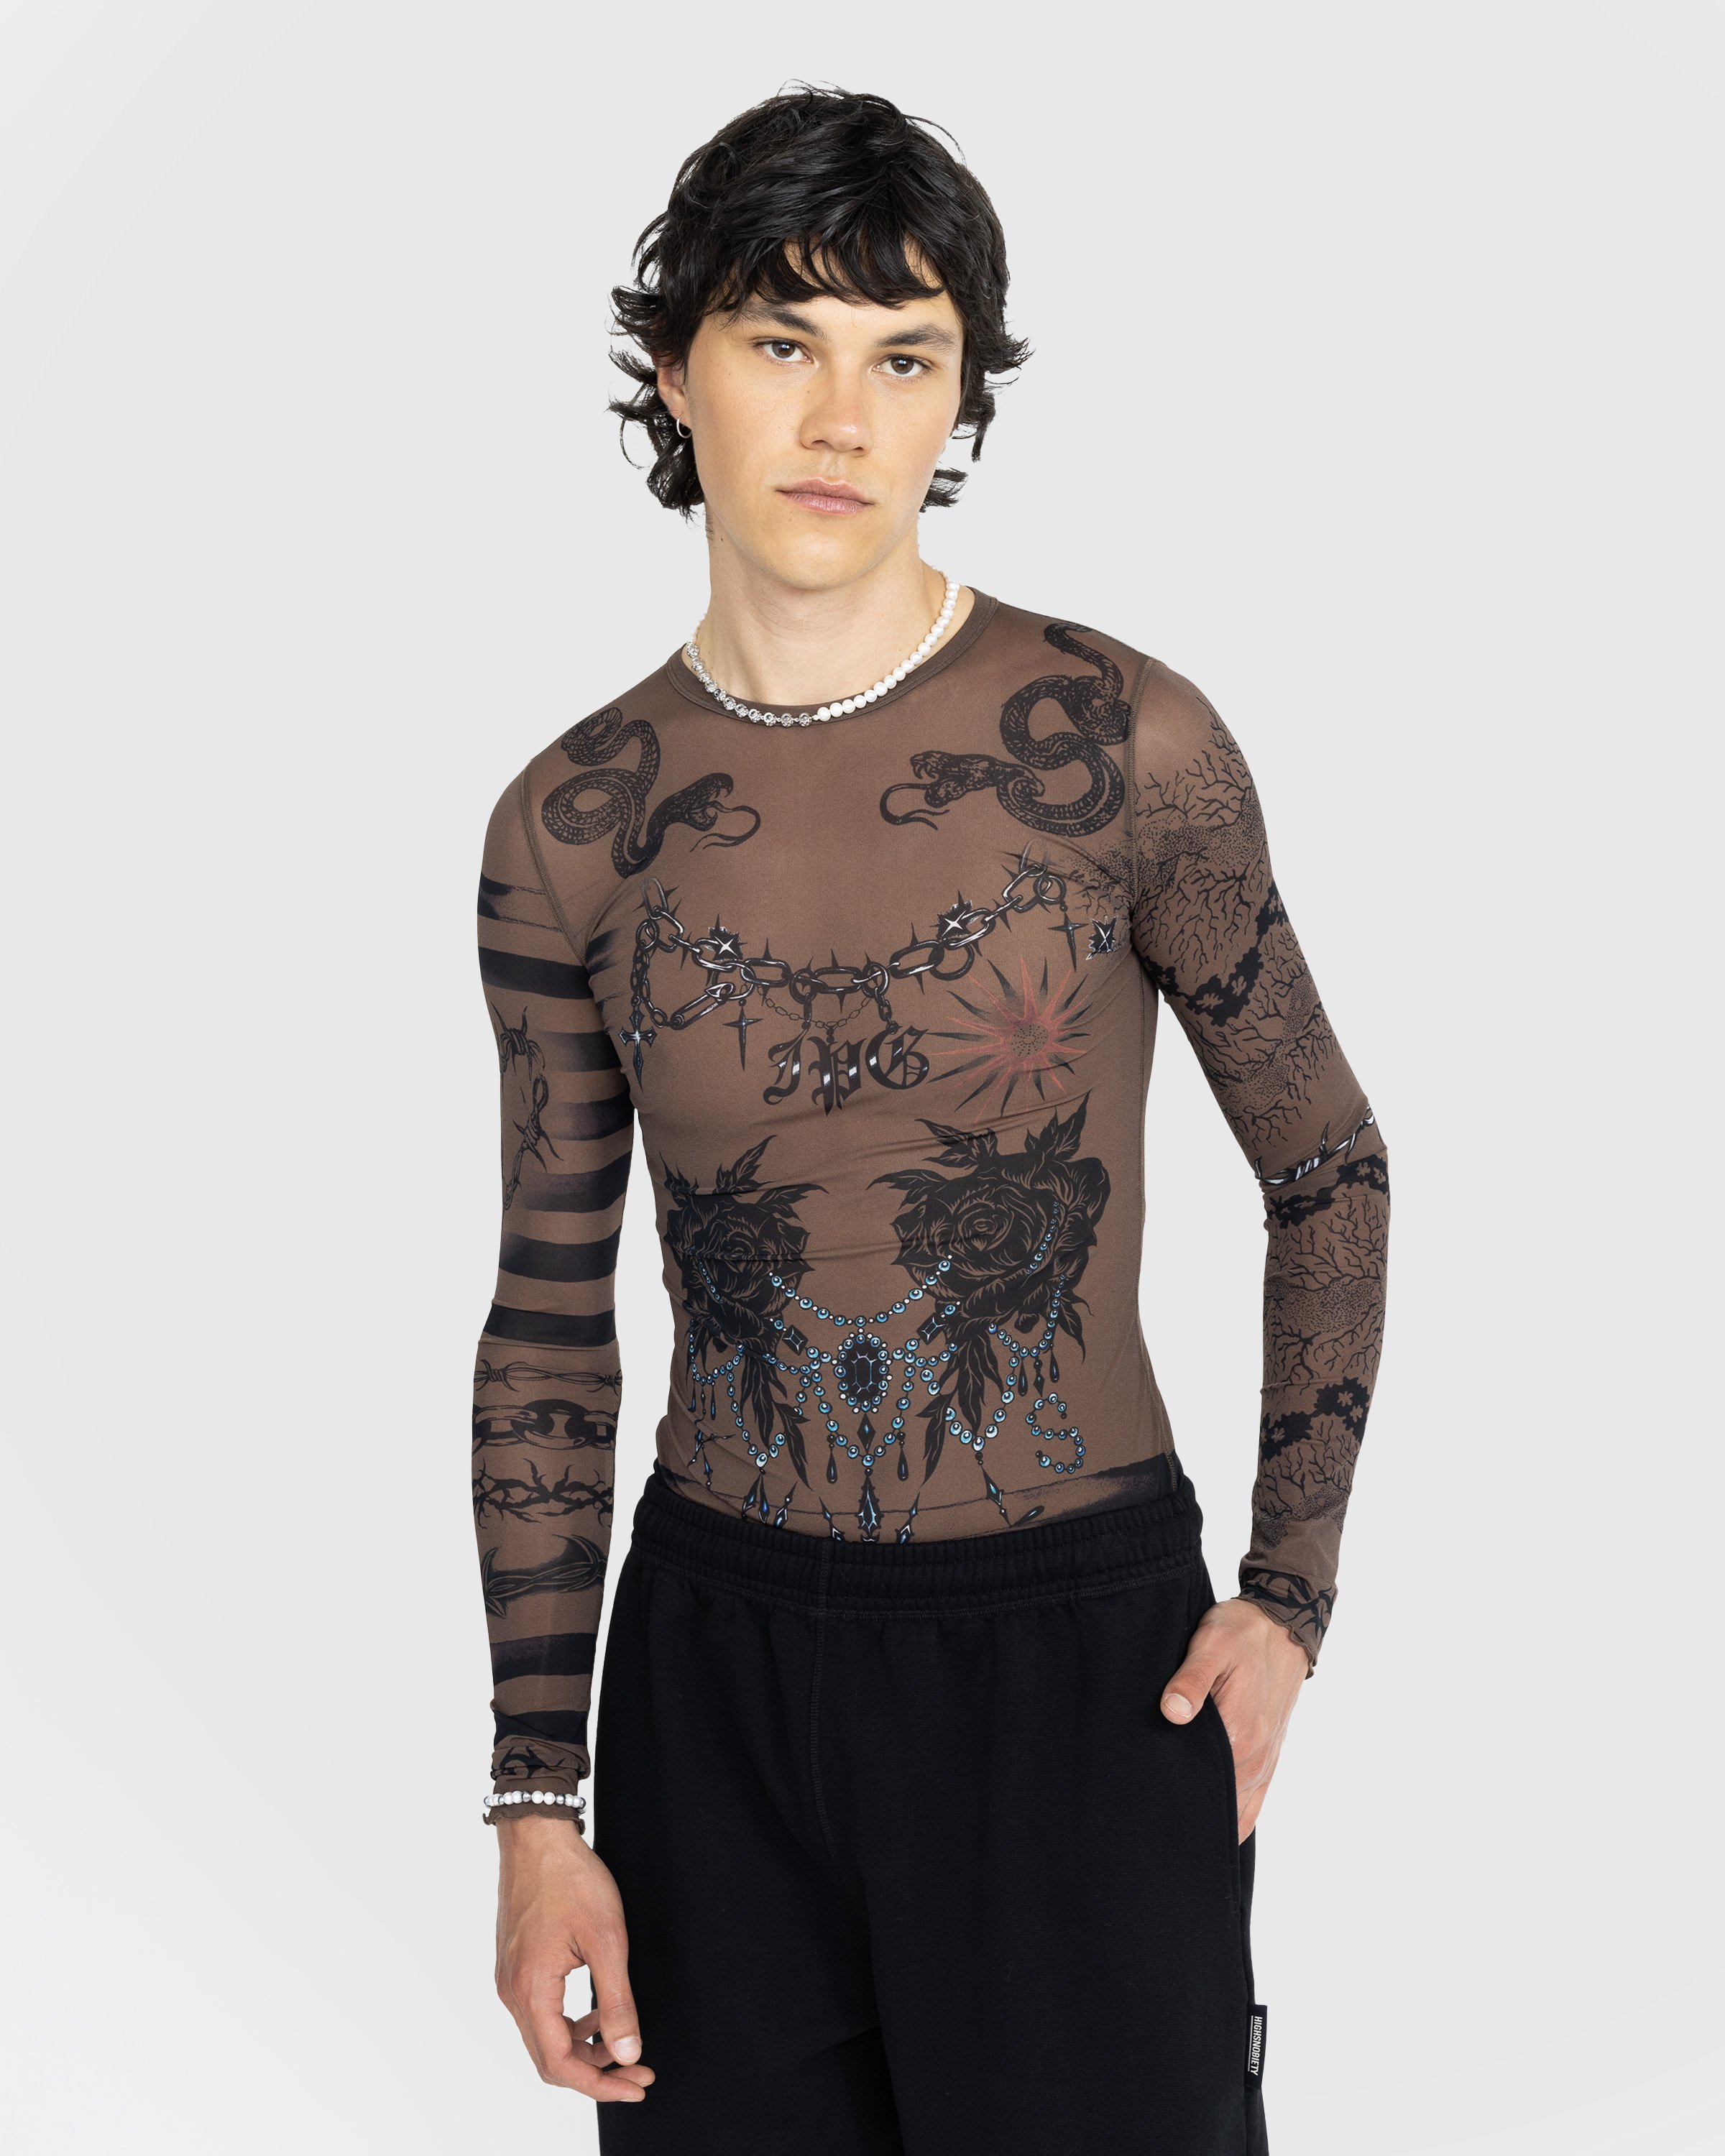 Jean Paul Gaultier - Trompe l'oeil Tattoo Longsleeve Top Ebene/Grey/Black - Clothing - Brown - Image 2